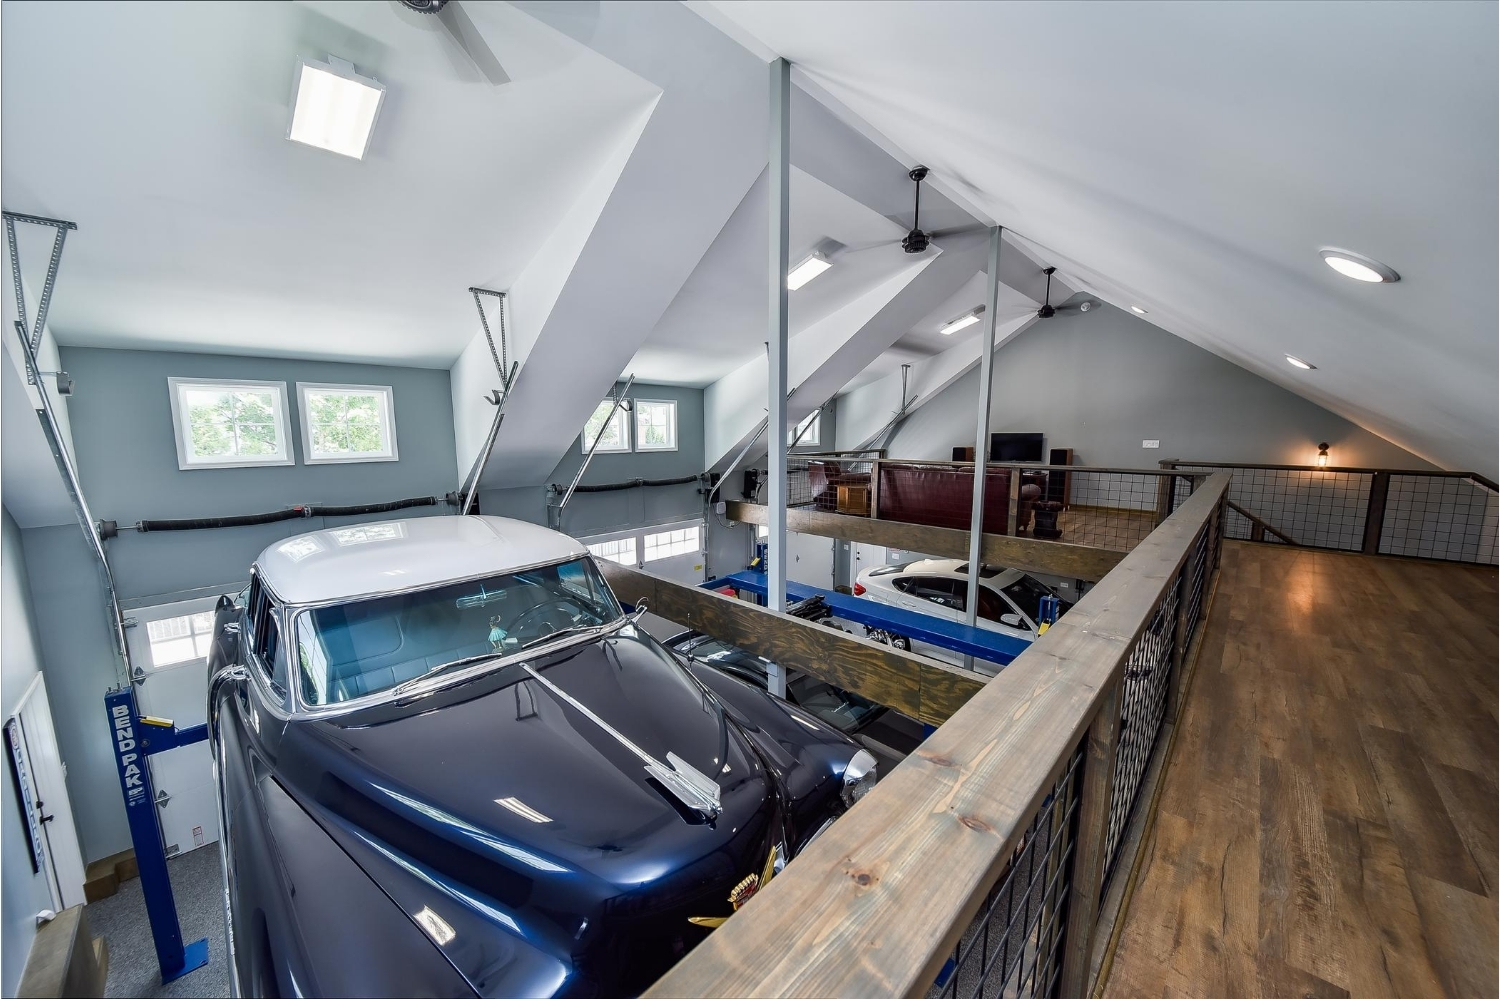 Luxury Garage Remodel Pictures